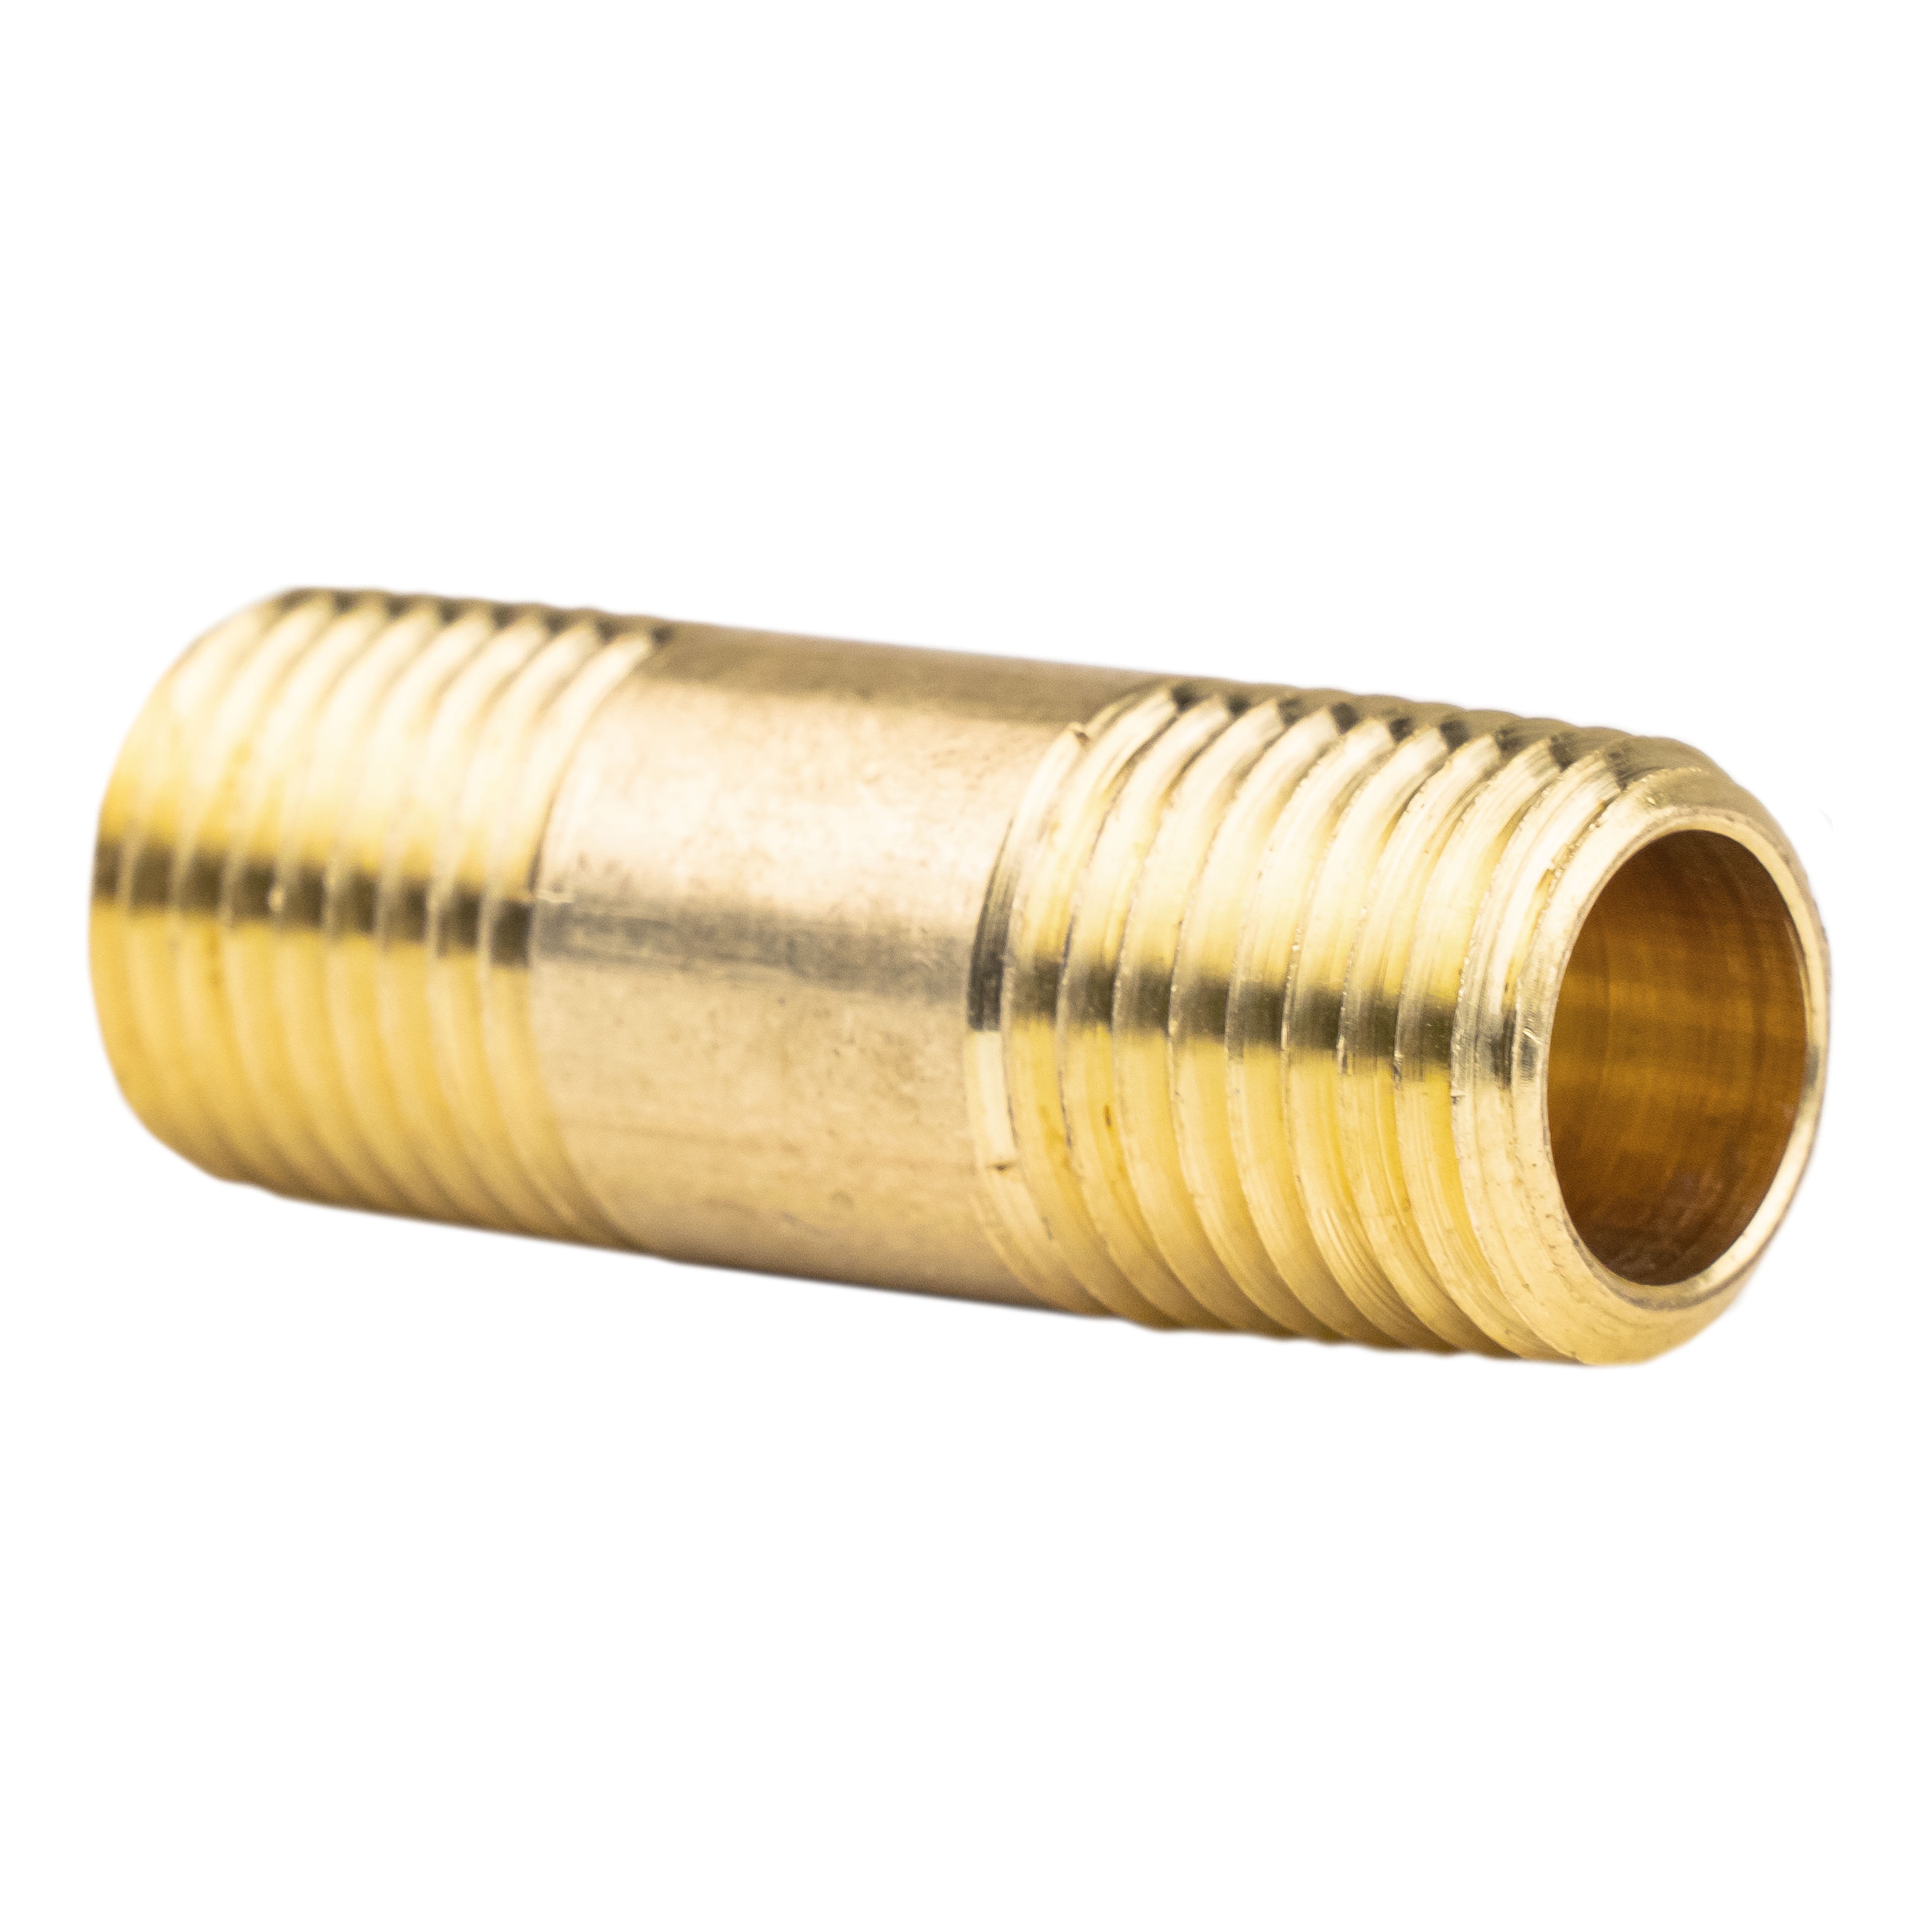 1/4 inch x 4.5" Nipple Brass Pipe Fitting NPT male thread air water gas fuel